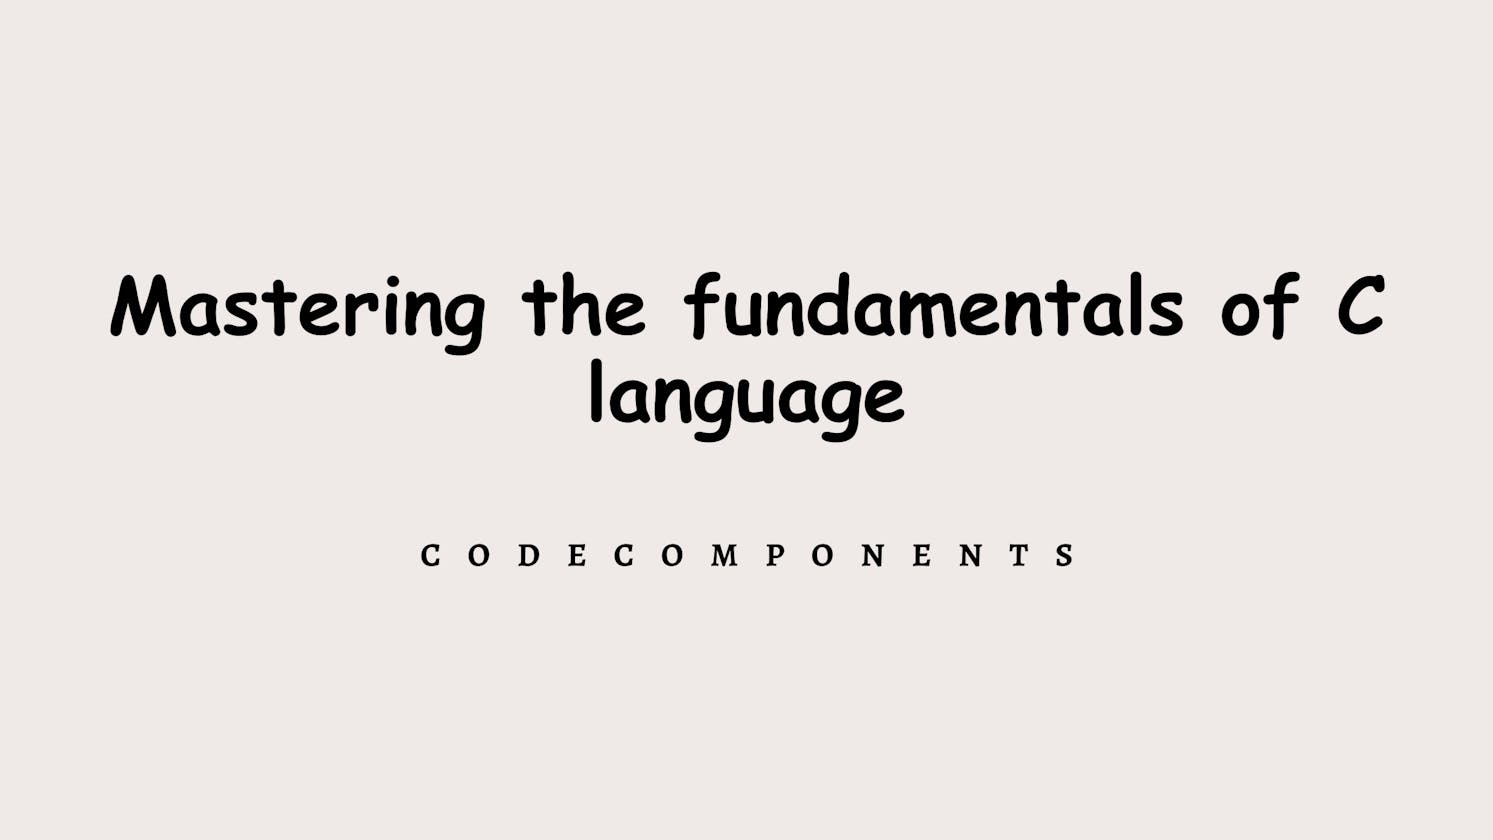 Mastering the fundamentals of C language